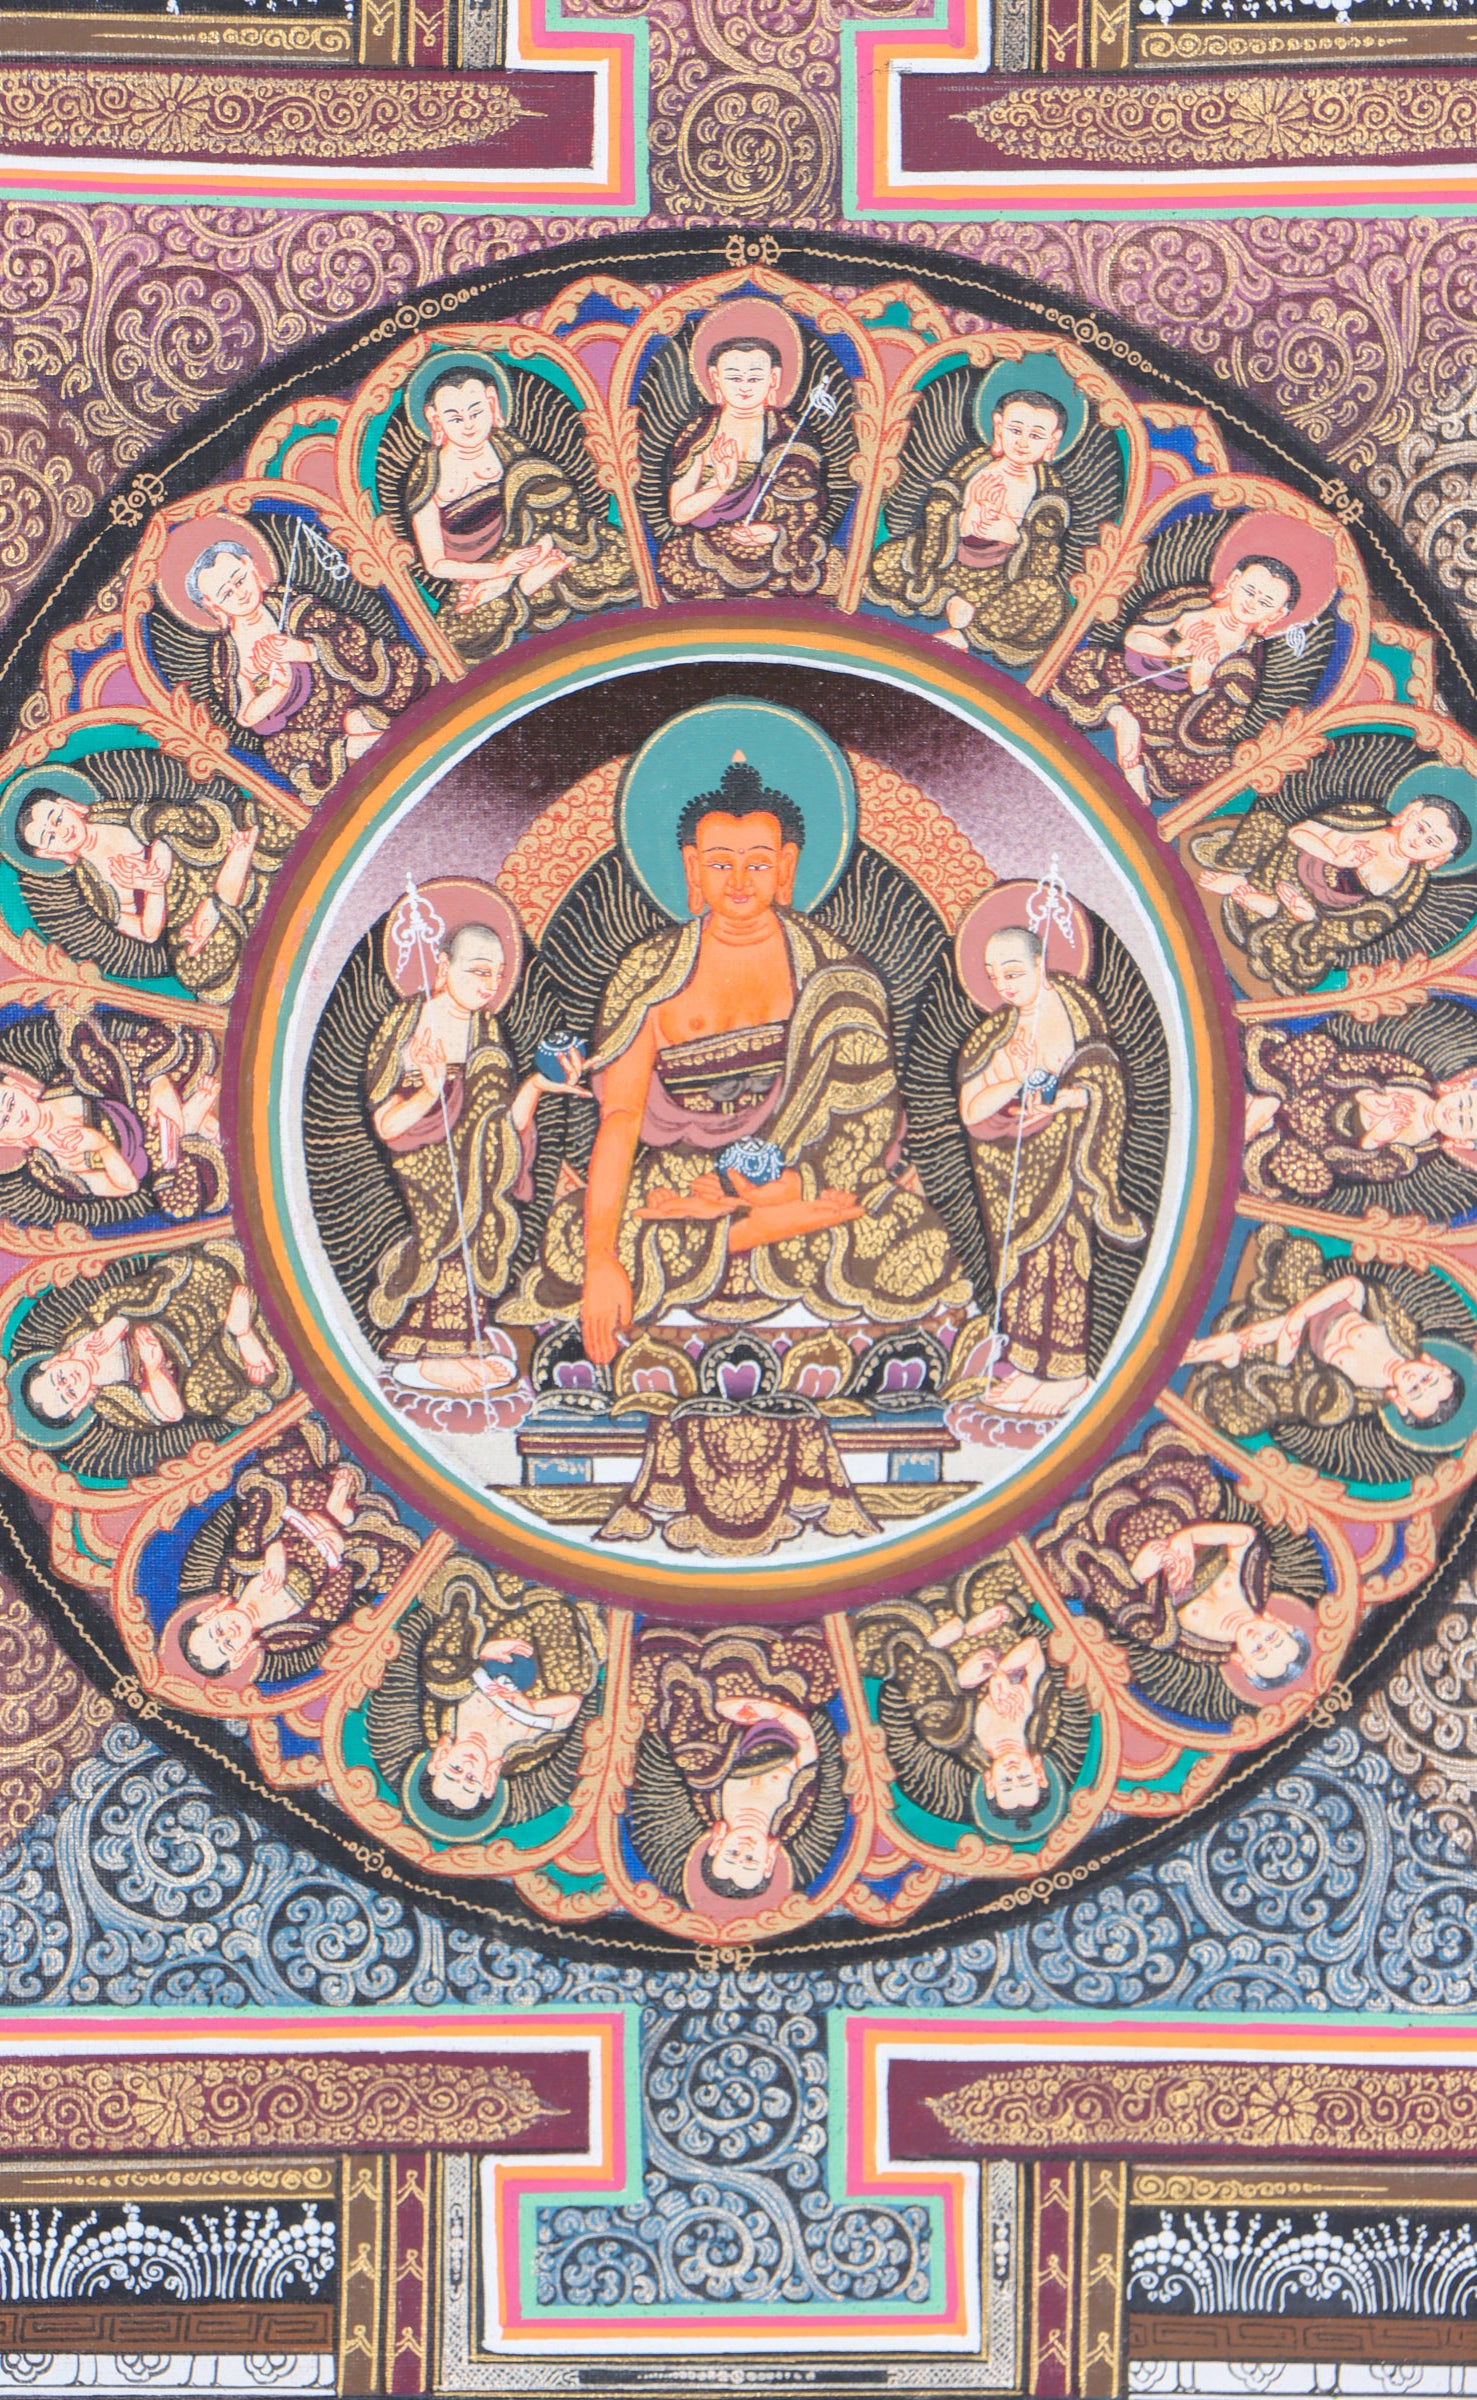 Shakyamuni Buddha Mandala Thangka - high quality thangka